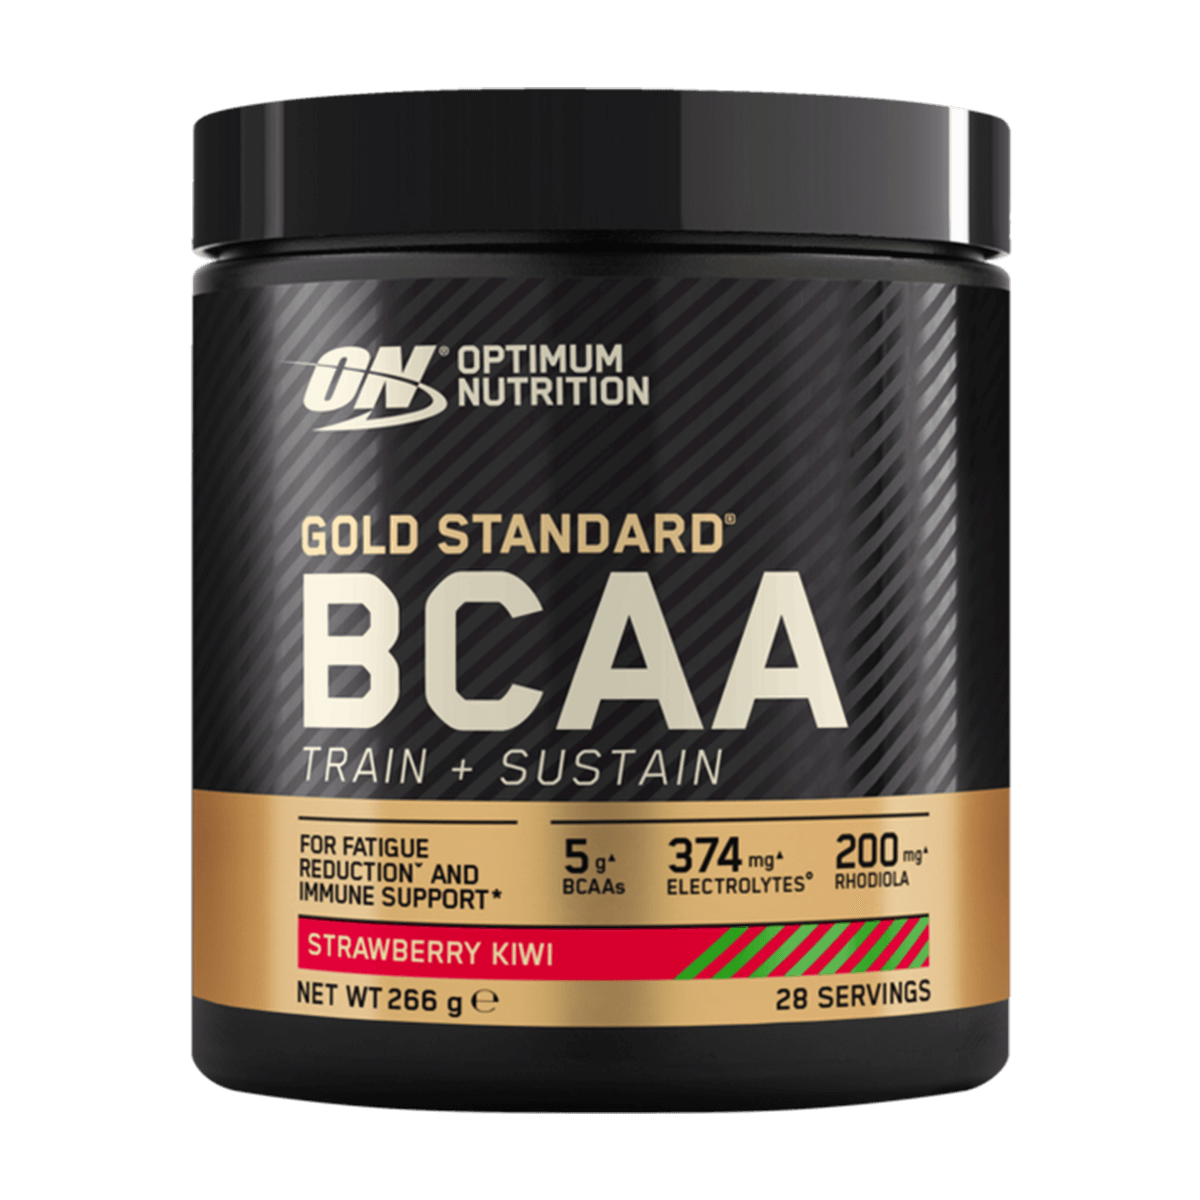 BCAA Train + Sustain Gold Standard - Optimum Nutrition 266 g